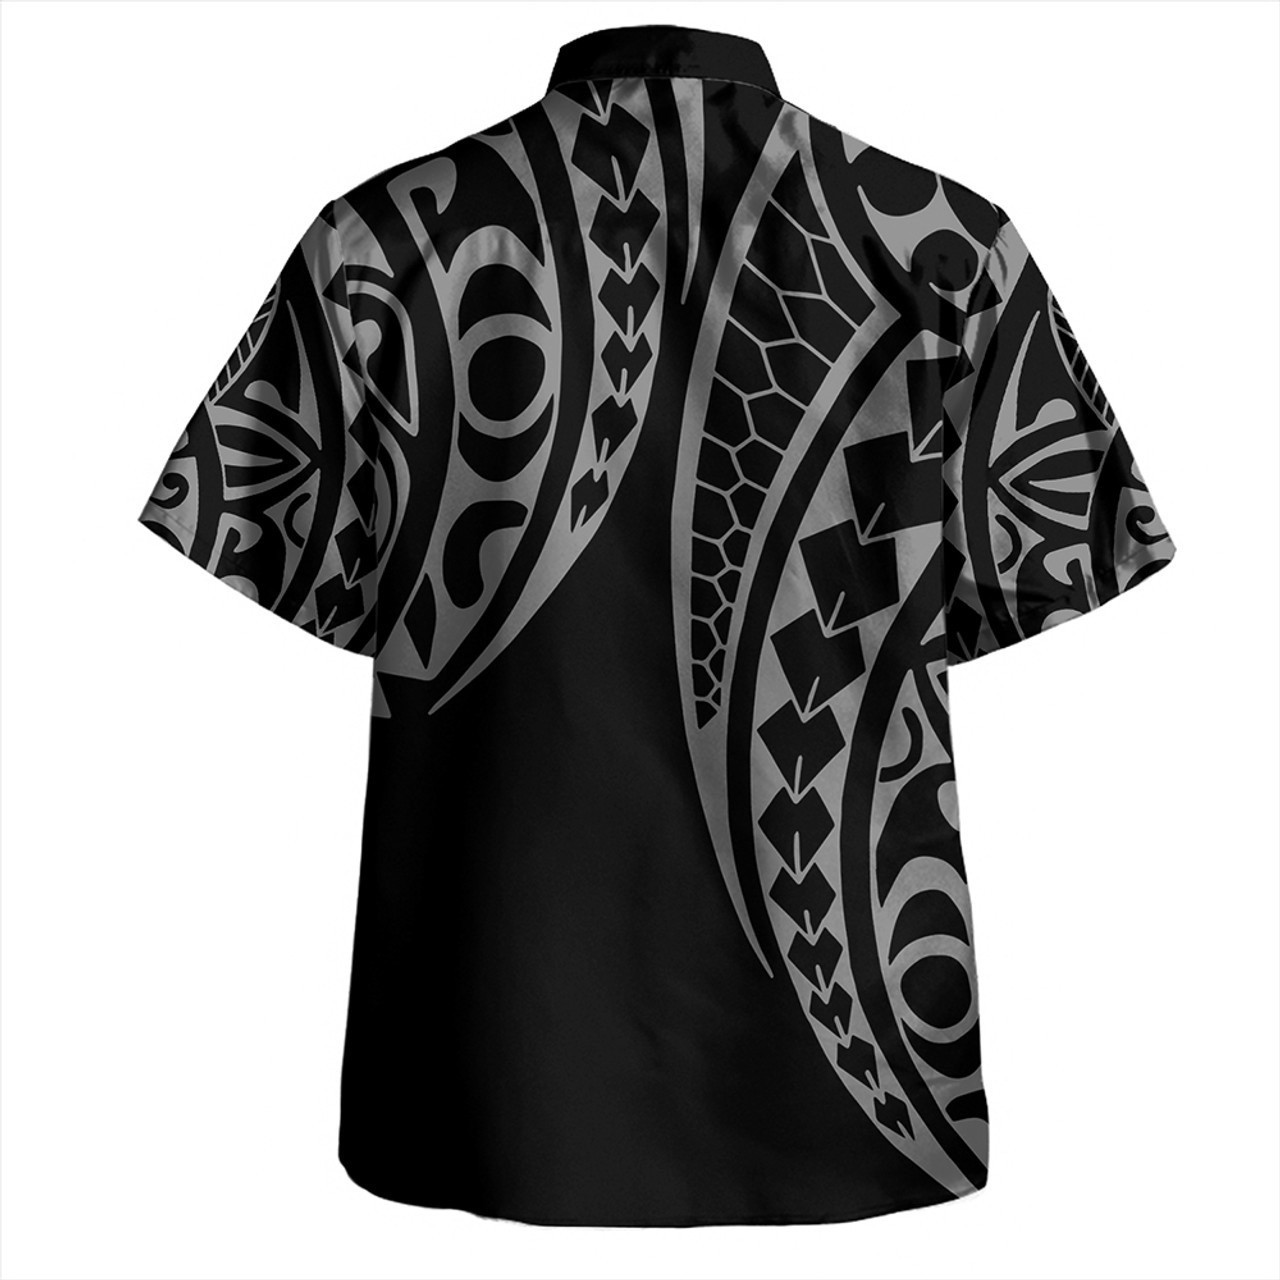 Cook Islands Combo Puletasi And Shirt Kakau Style White